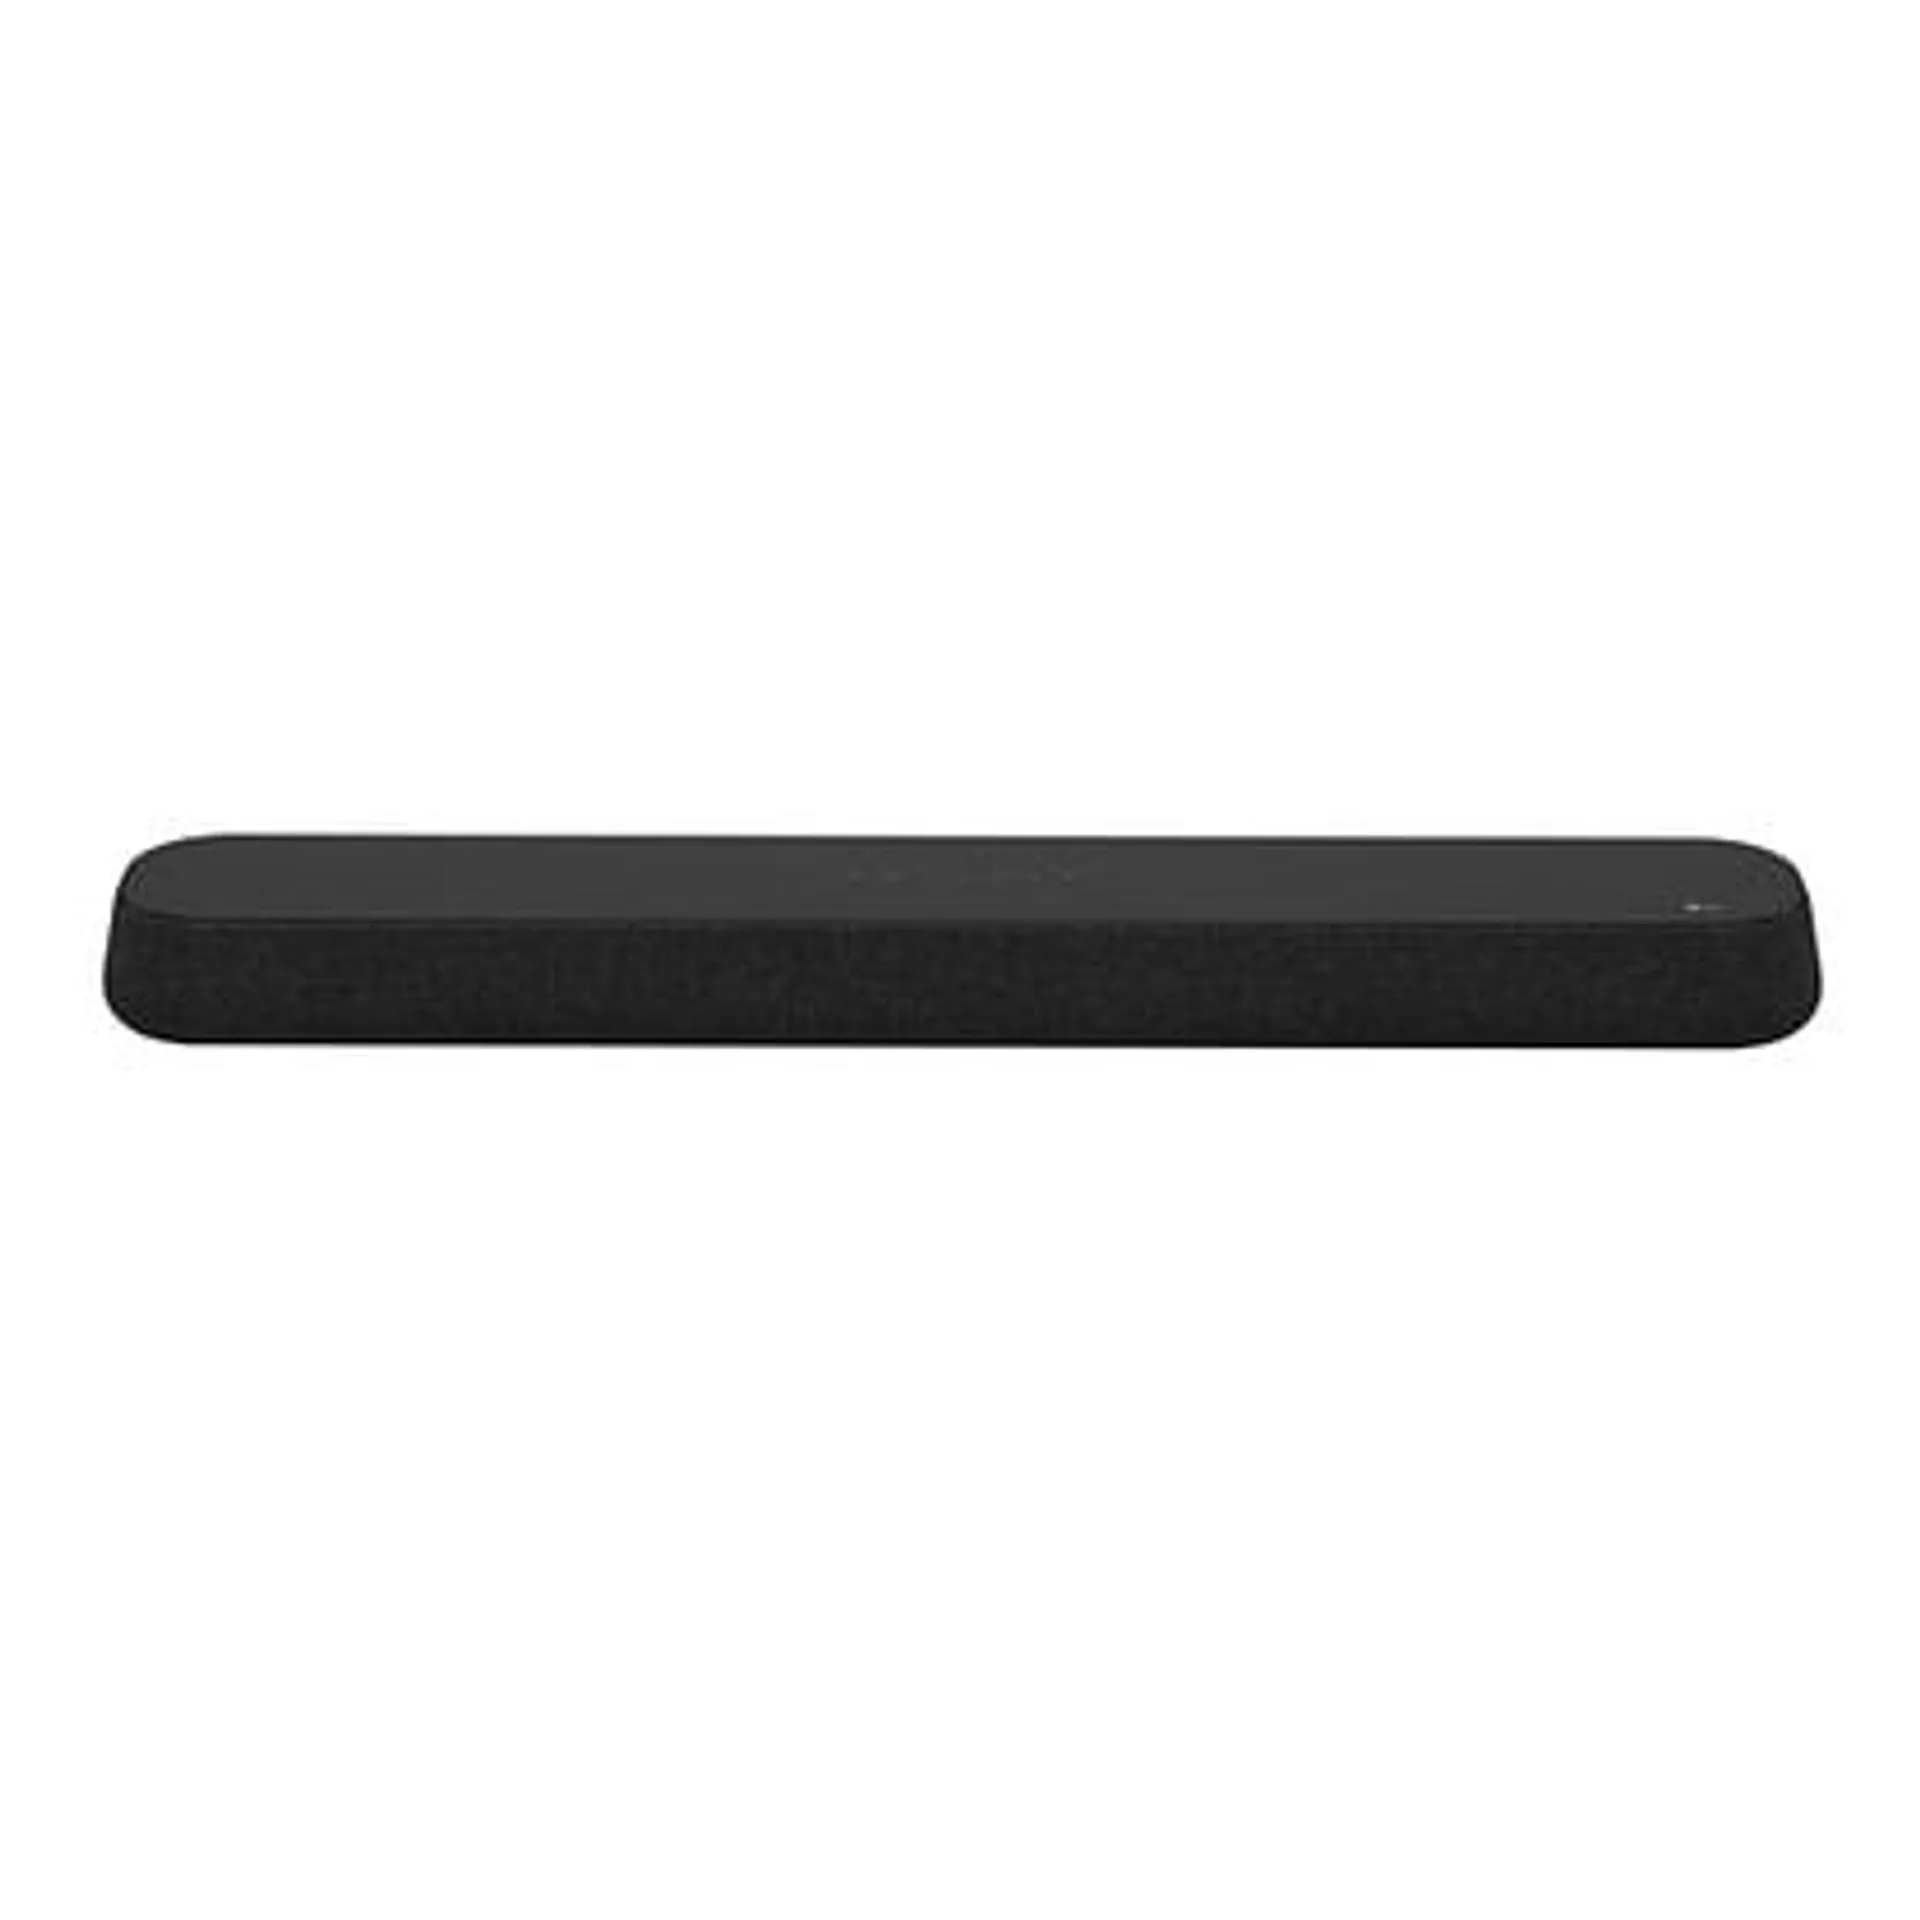 LG USE6S 100W 3.0 Channel Bluetooth Soundbar – BLACK